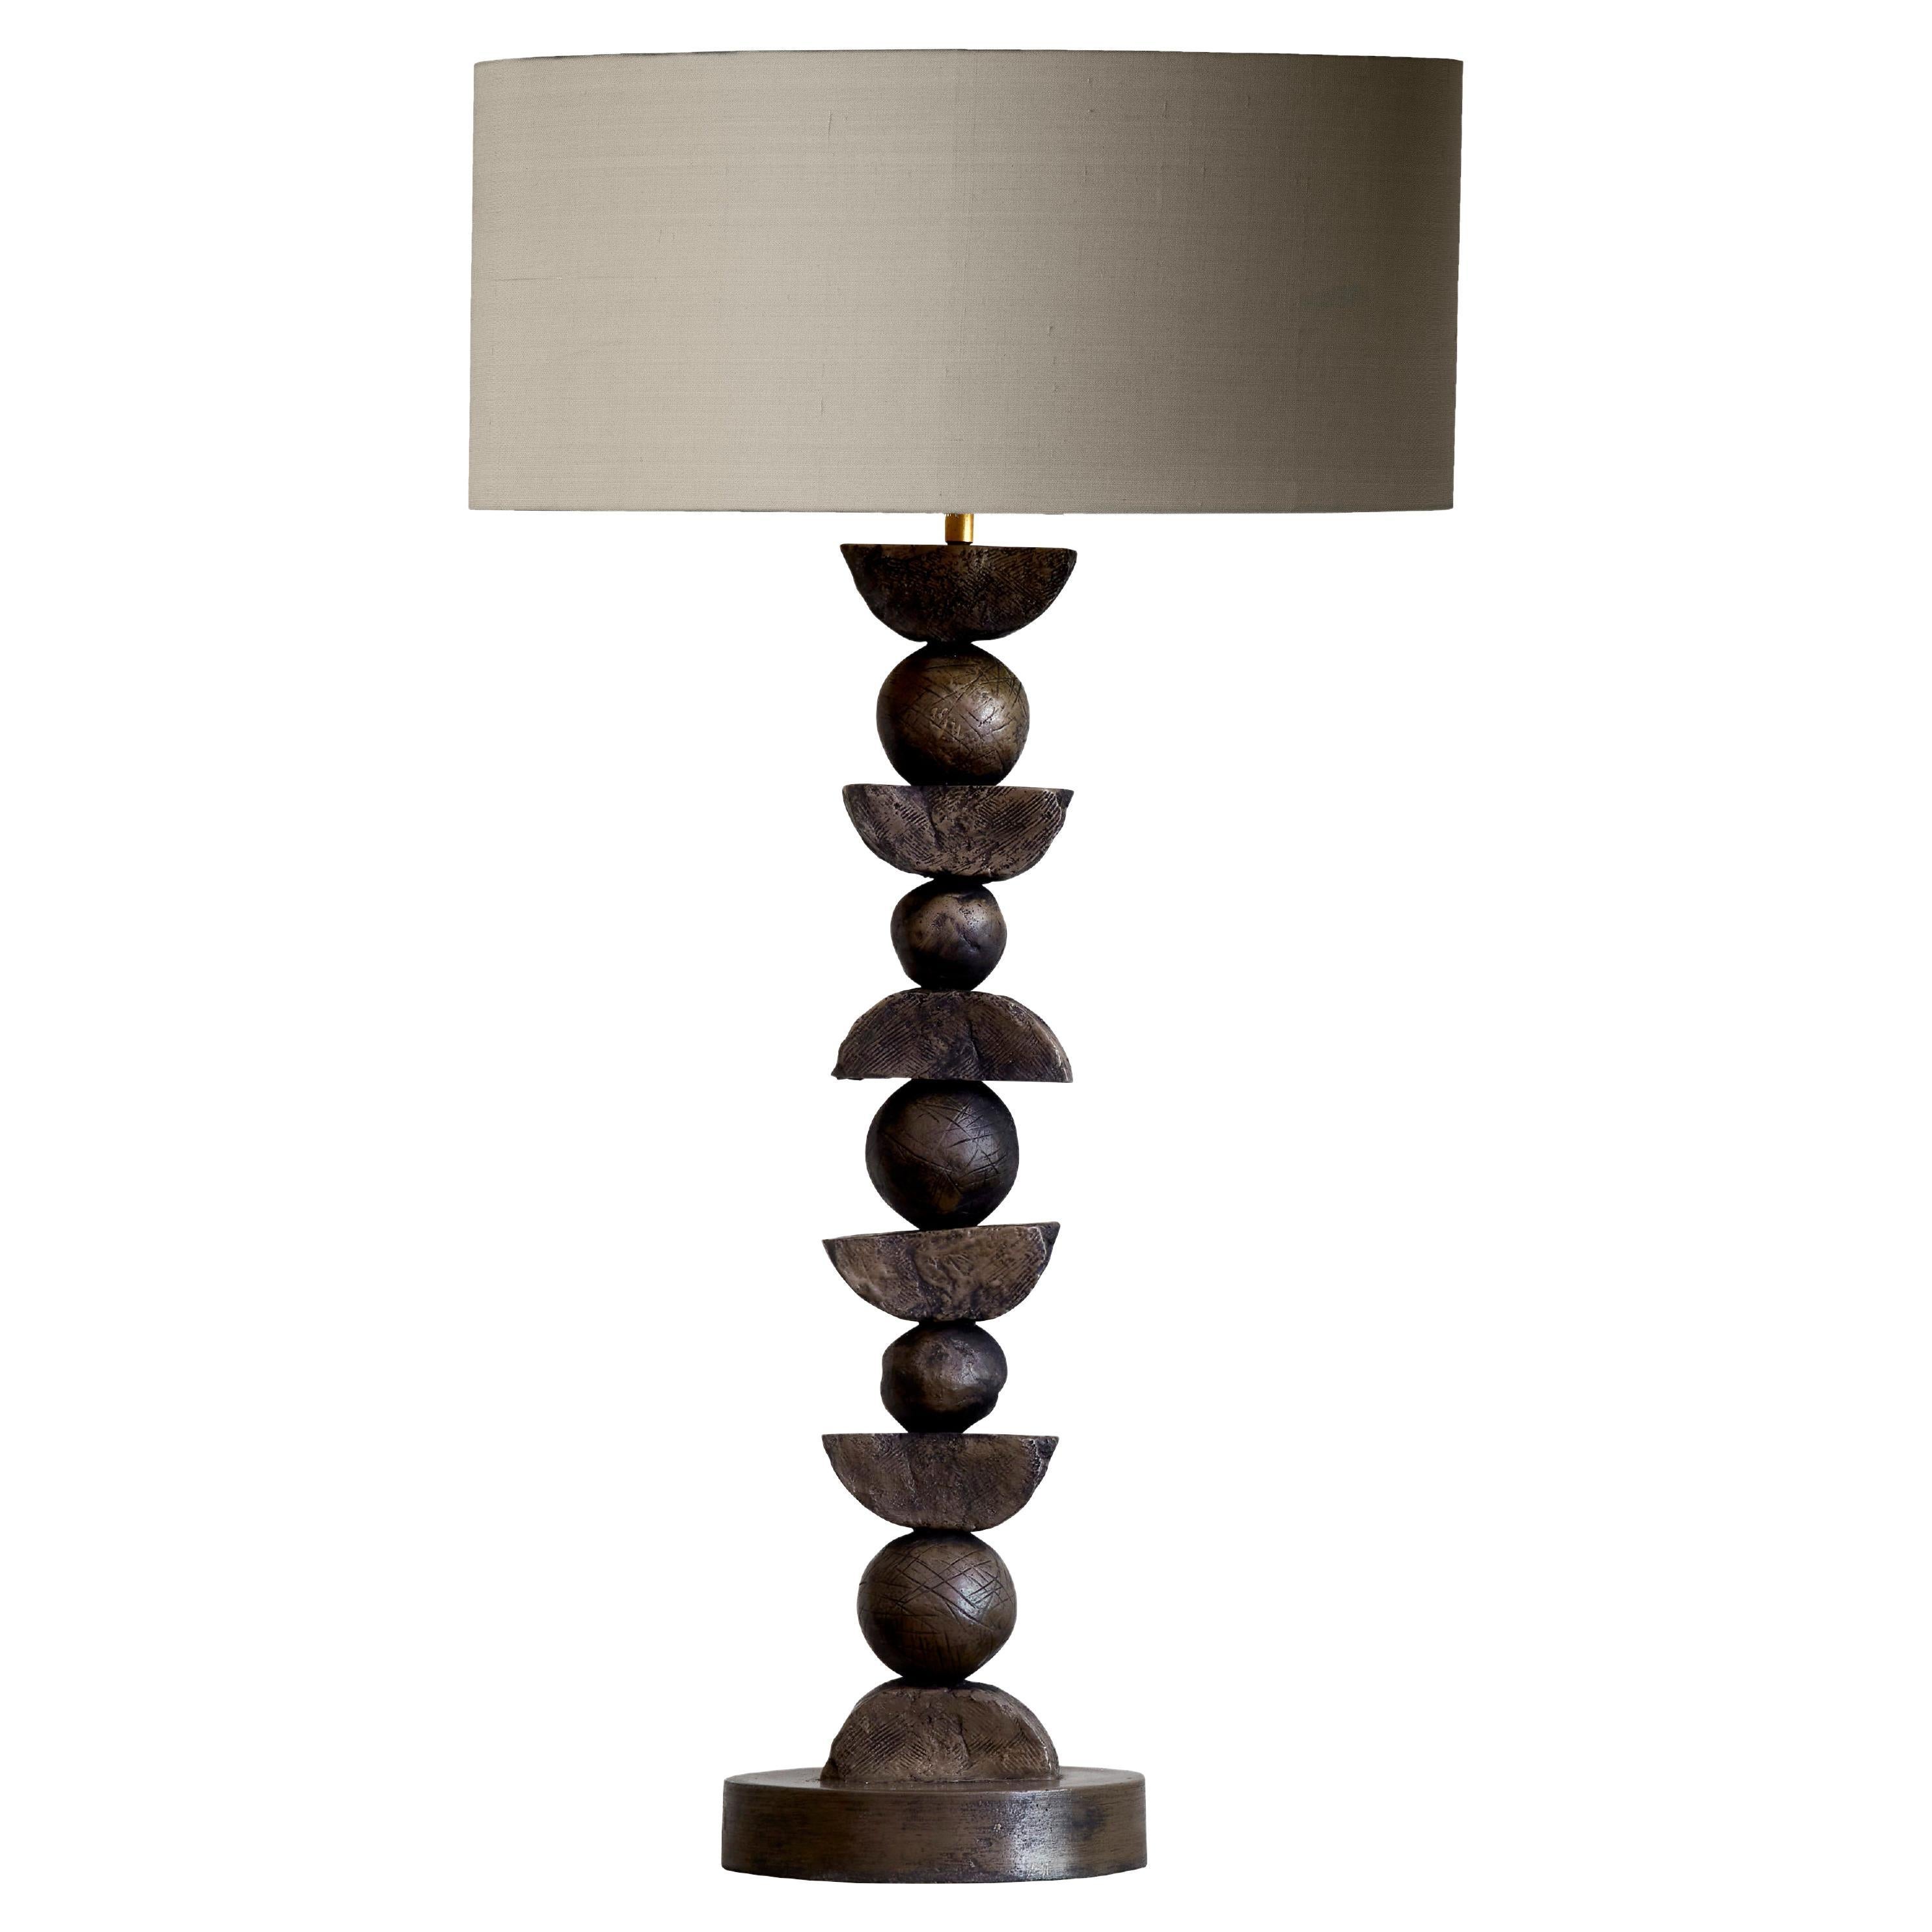 European, Silhouette Table Lamp by Margit Wittig, Bronze Resin